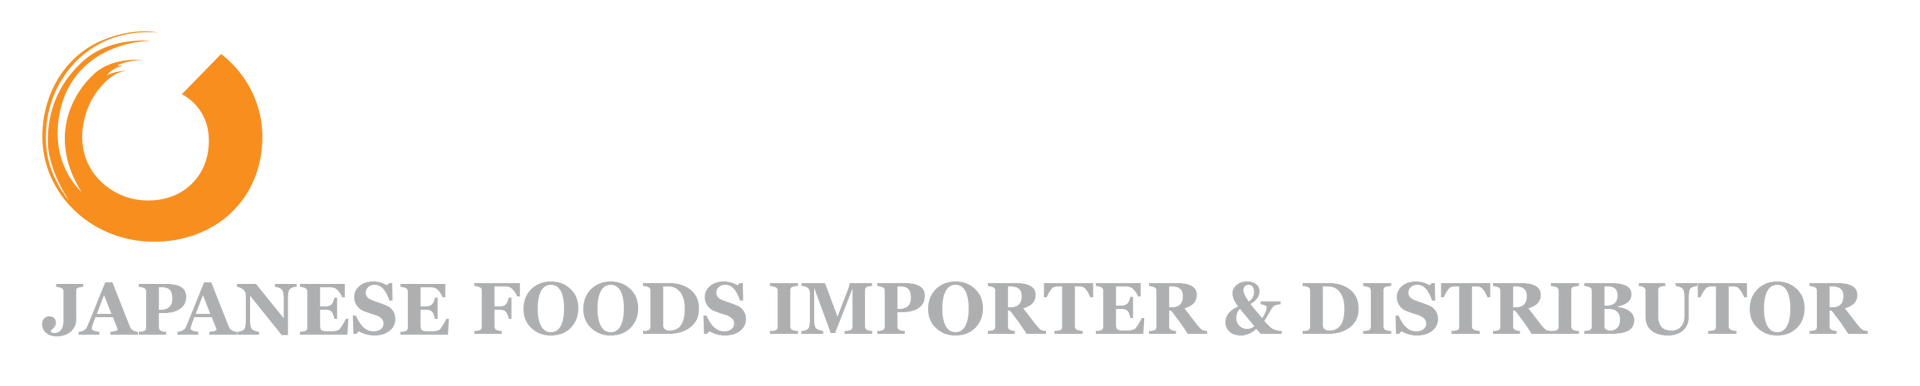 Tokyo Food Co Ltd logo